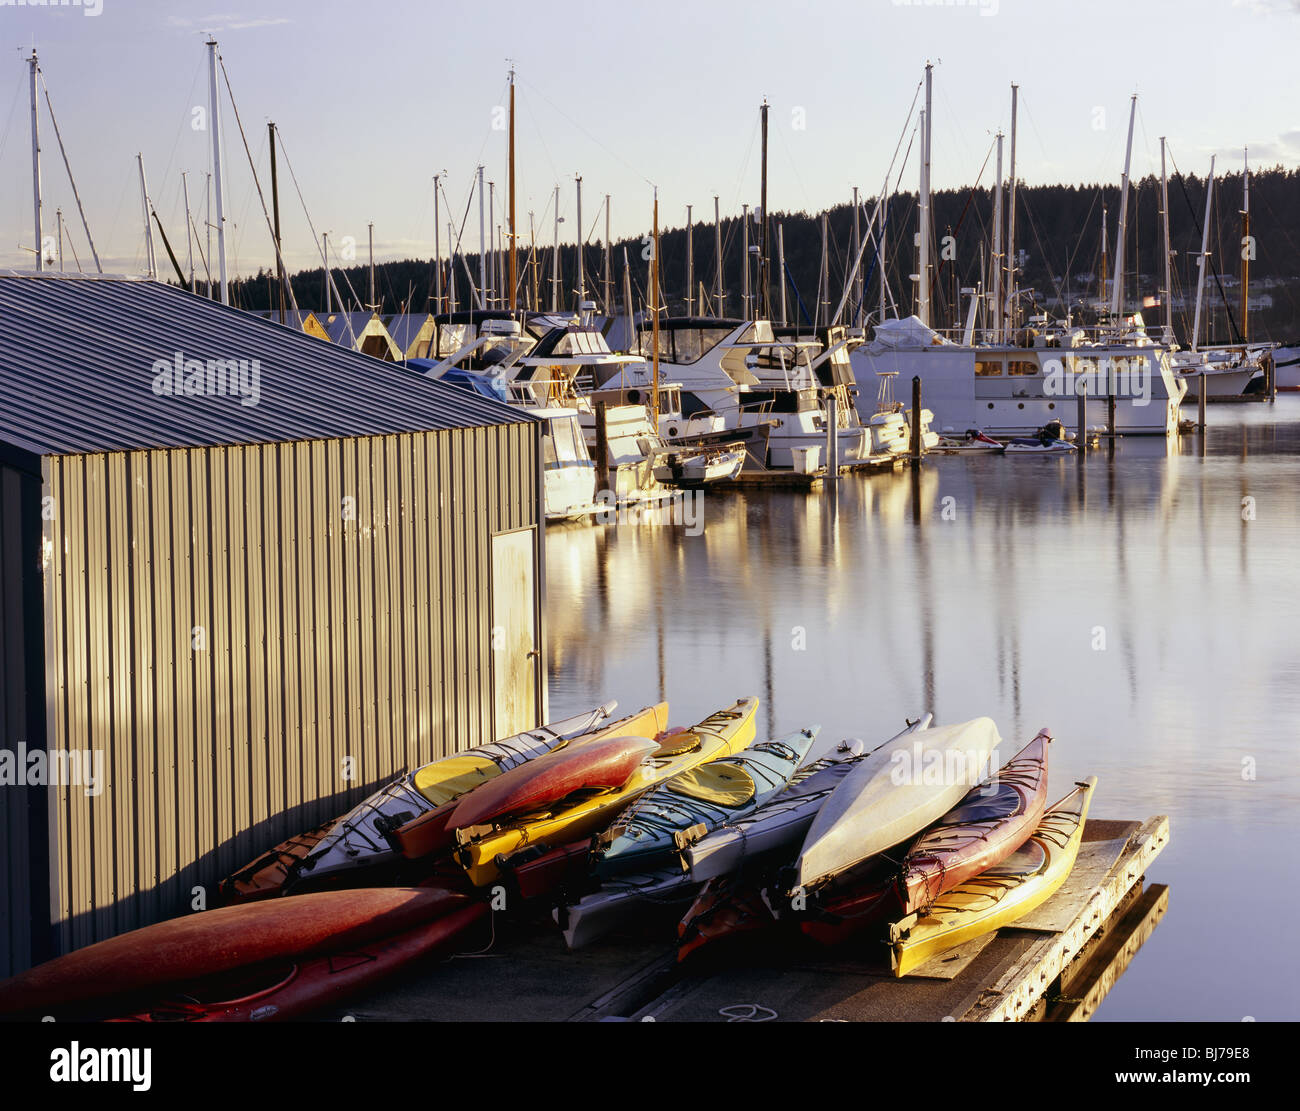 WASHINGTON - Kayaks on the boat dock at Liberty Bay on the Kitsap Peninsula in Poulsbo. Stock Photo